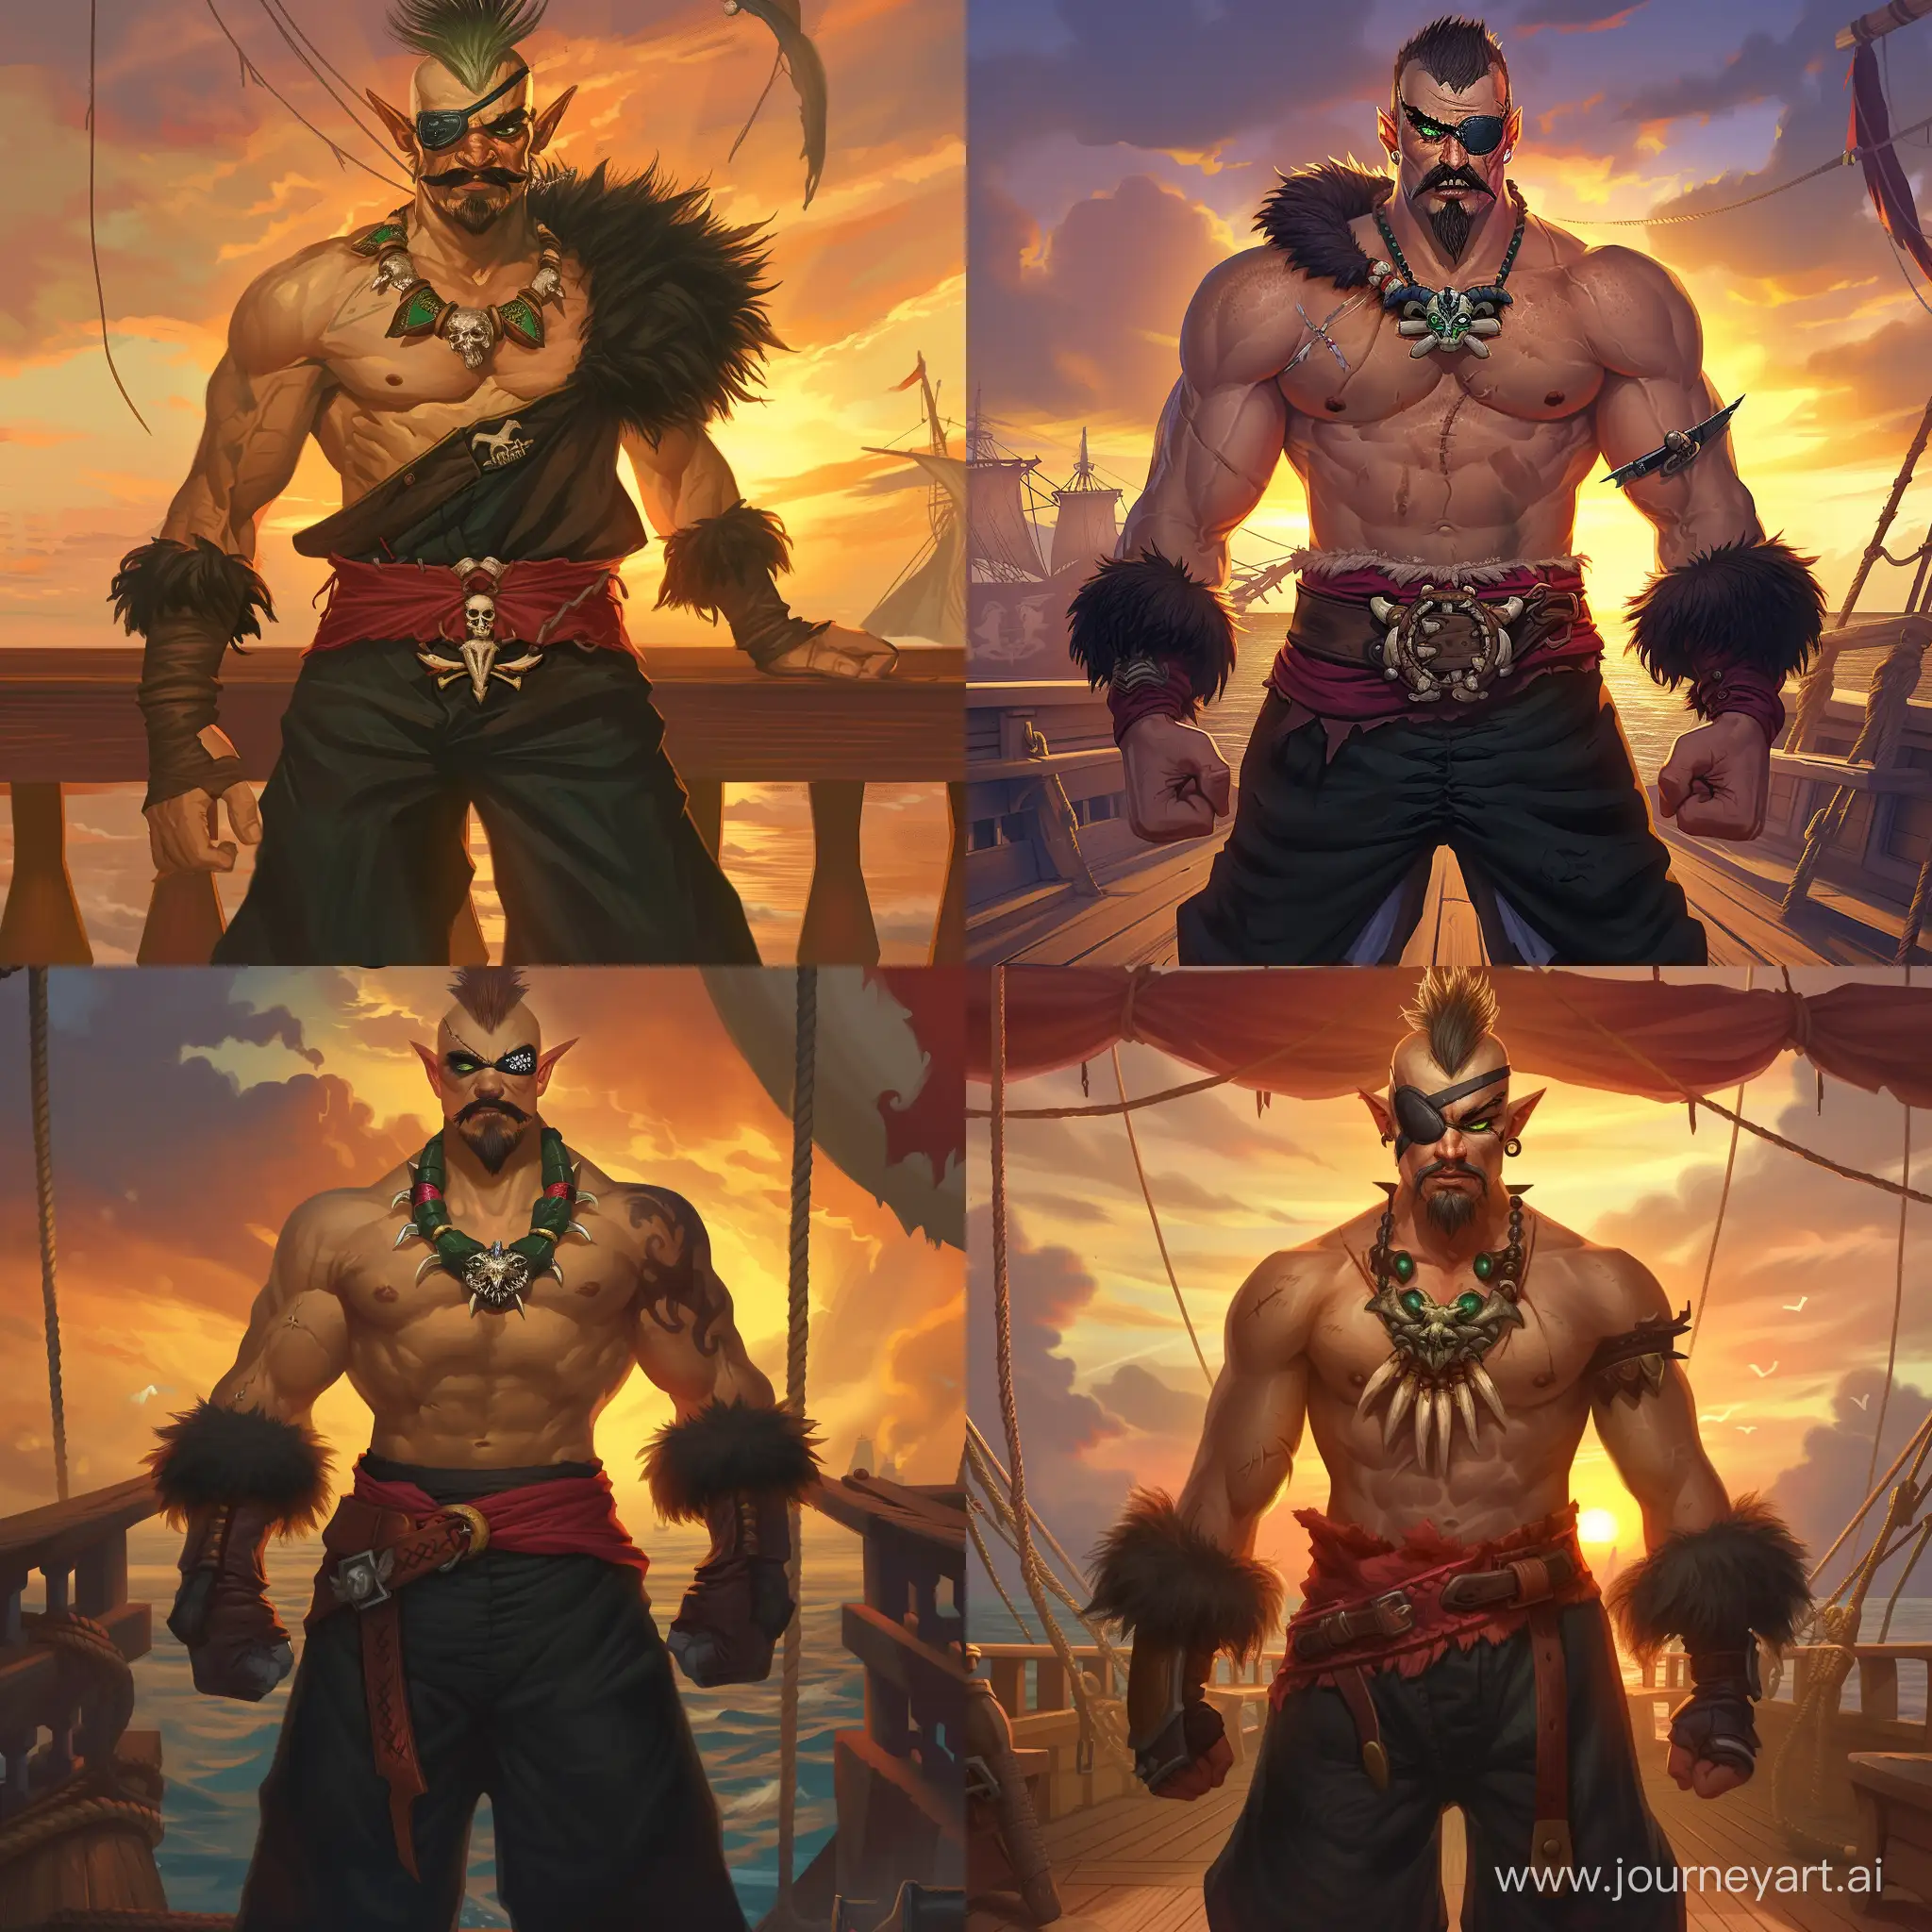 Muscular-Human-Barbarian-on-Pirate-Ship-at-Sunset